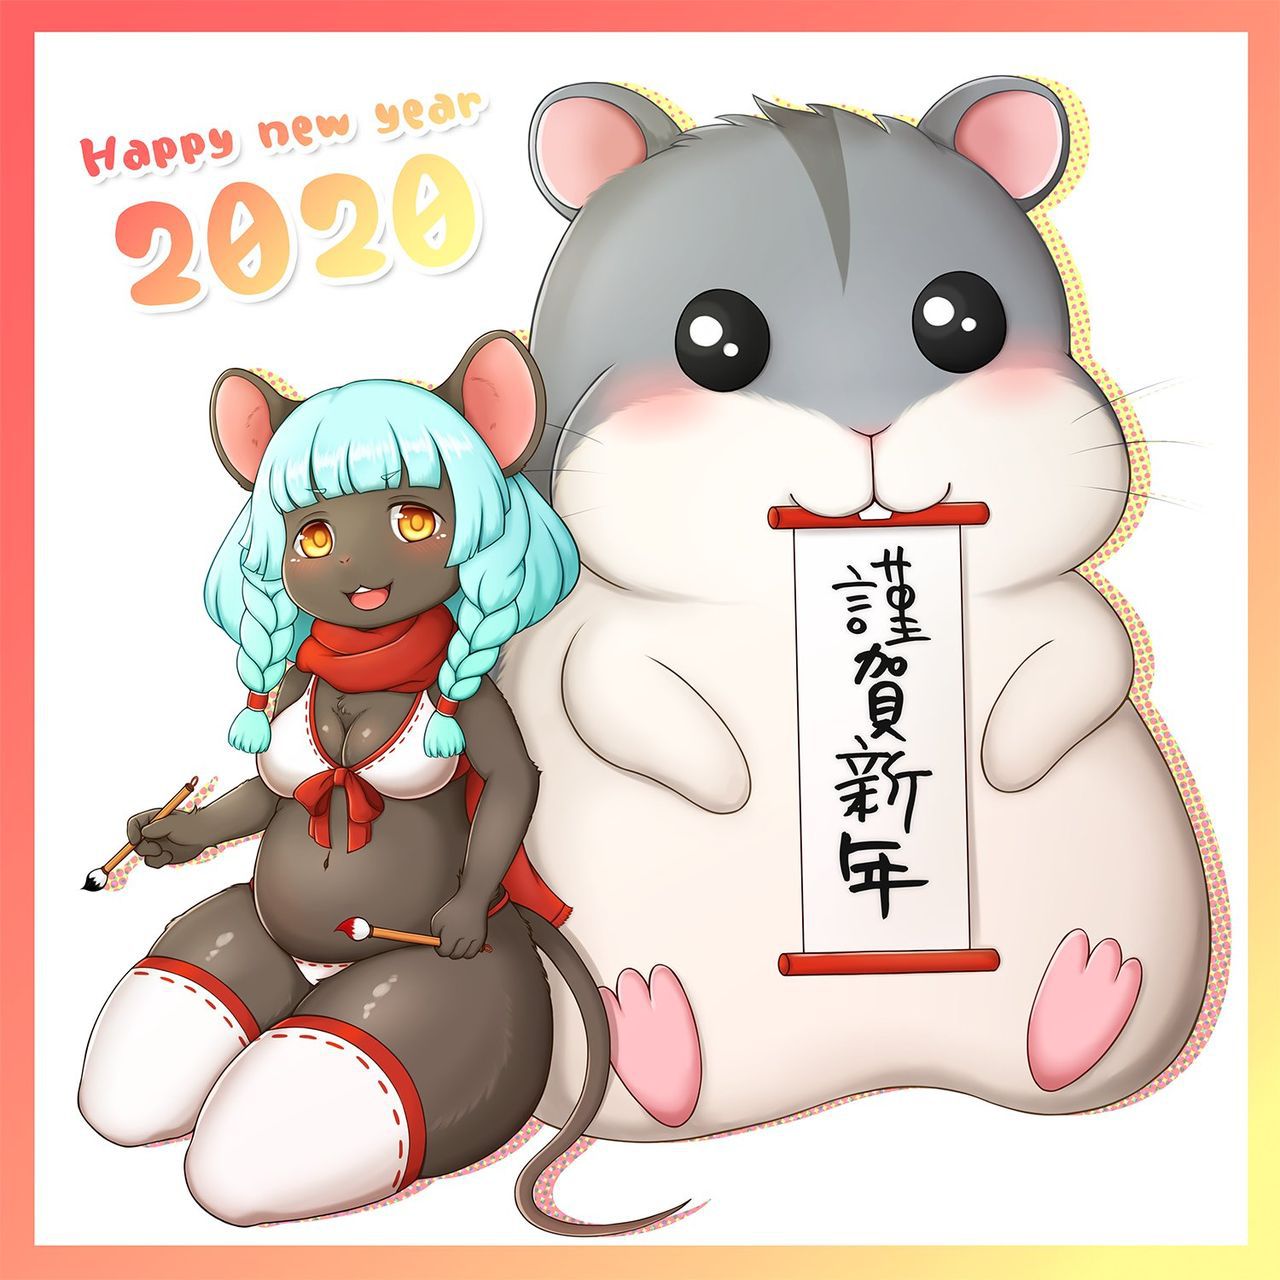 New Year 2020 12